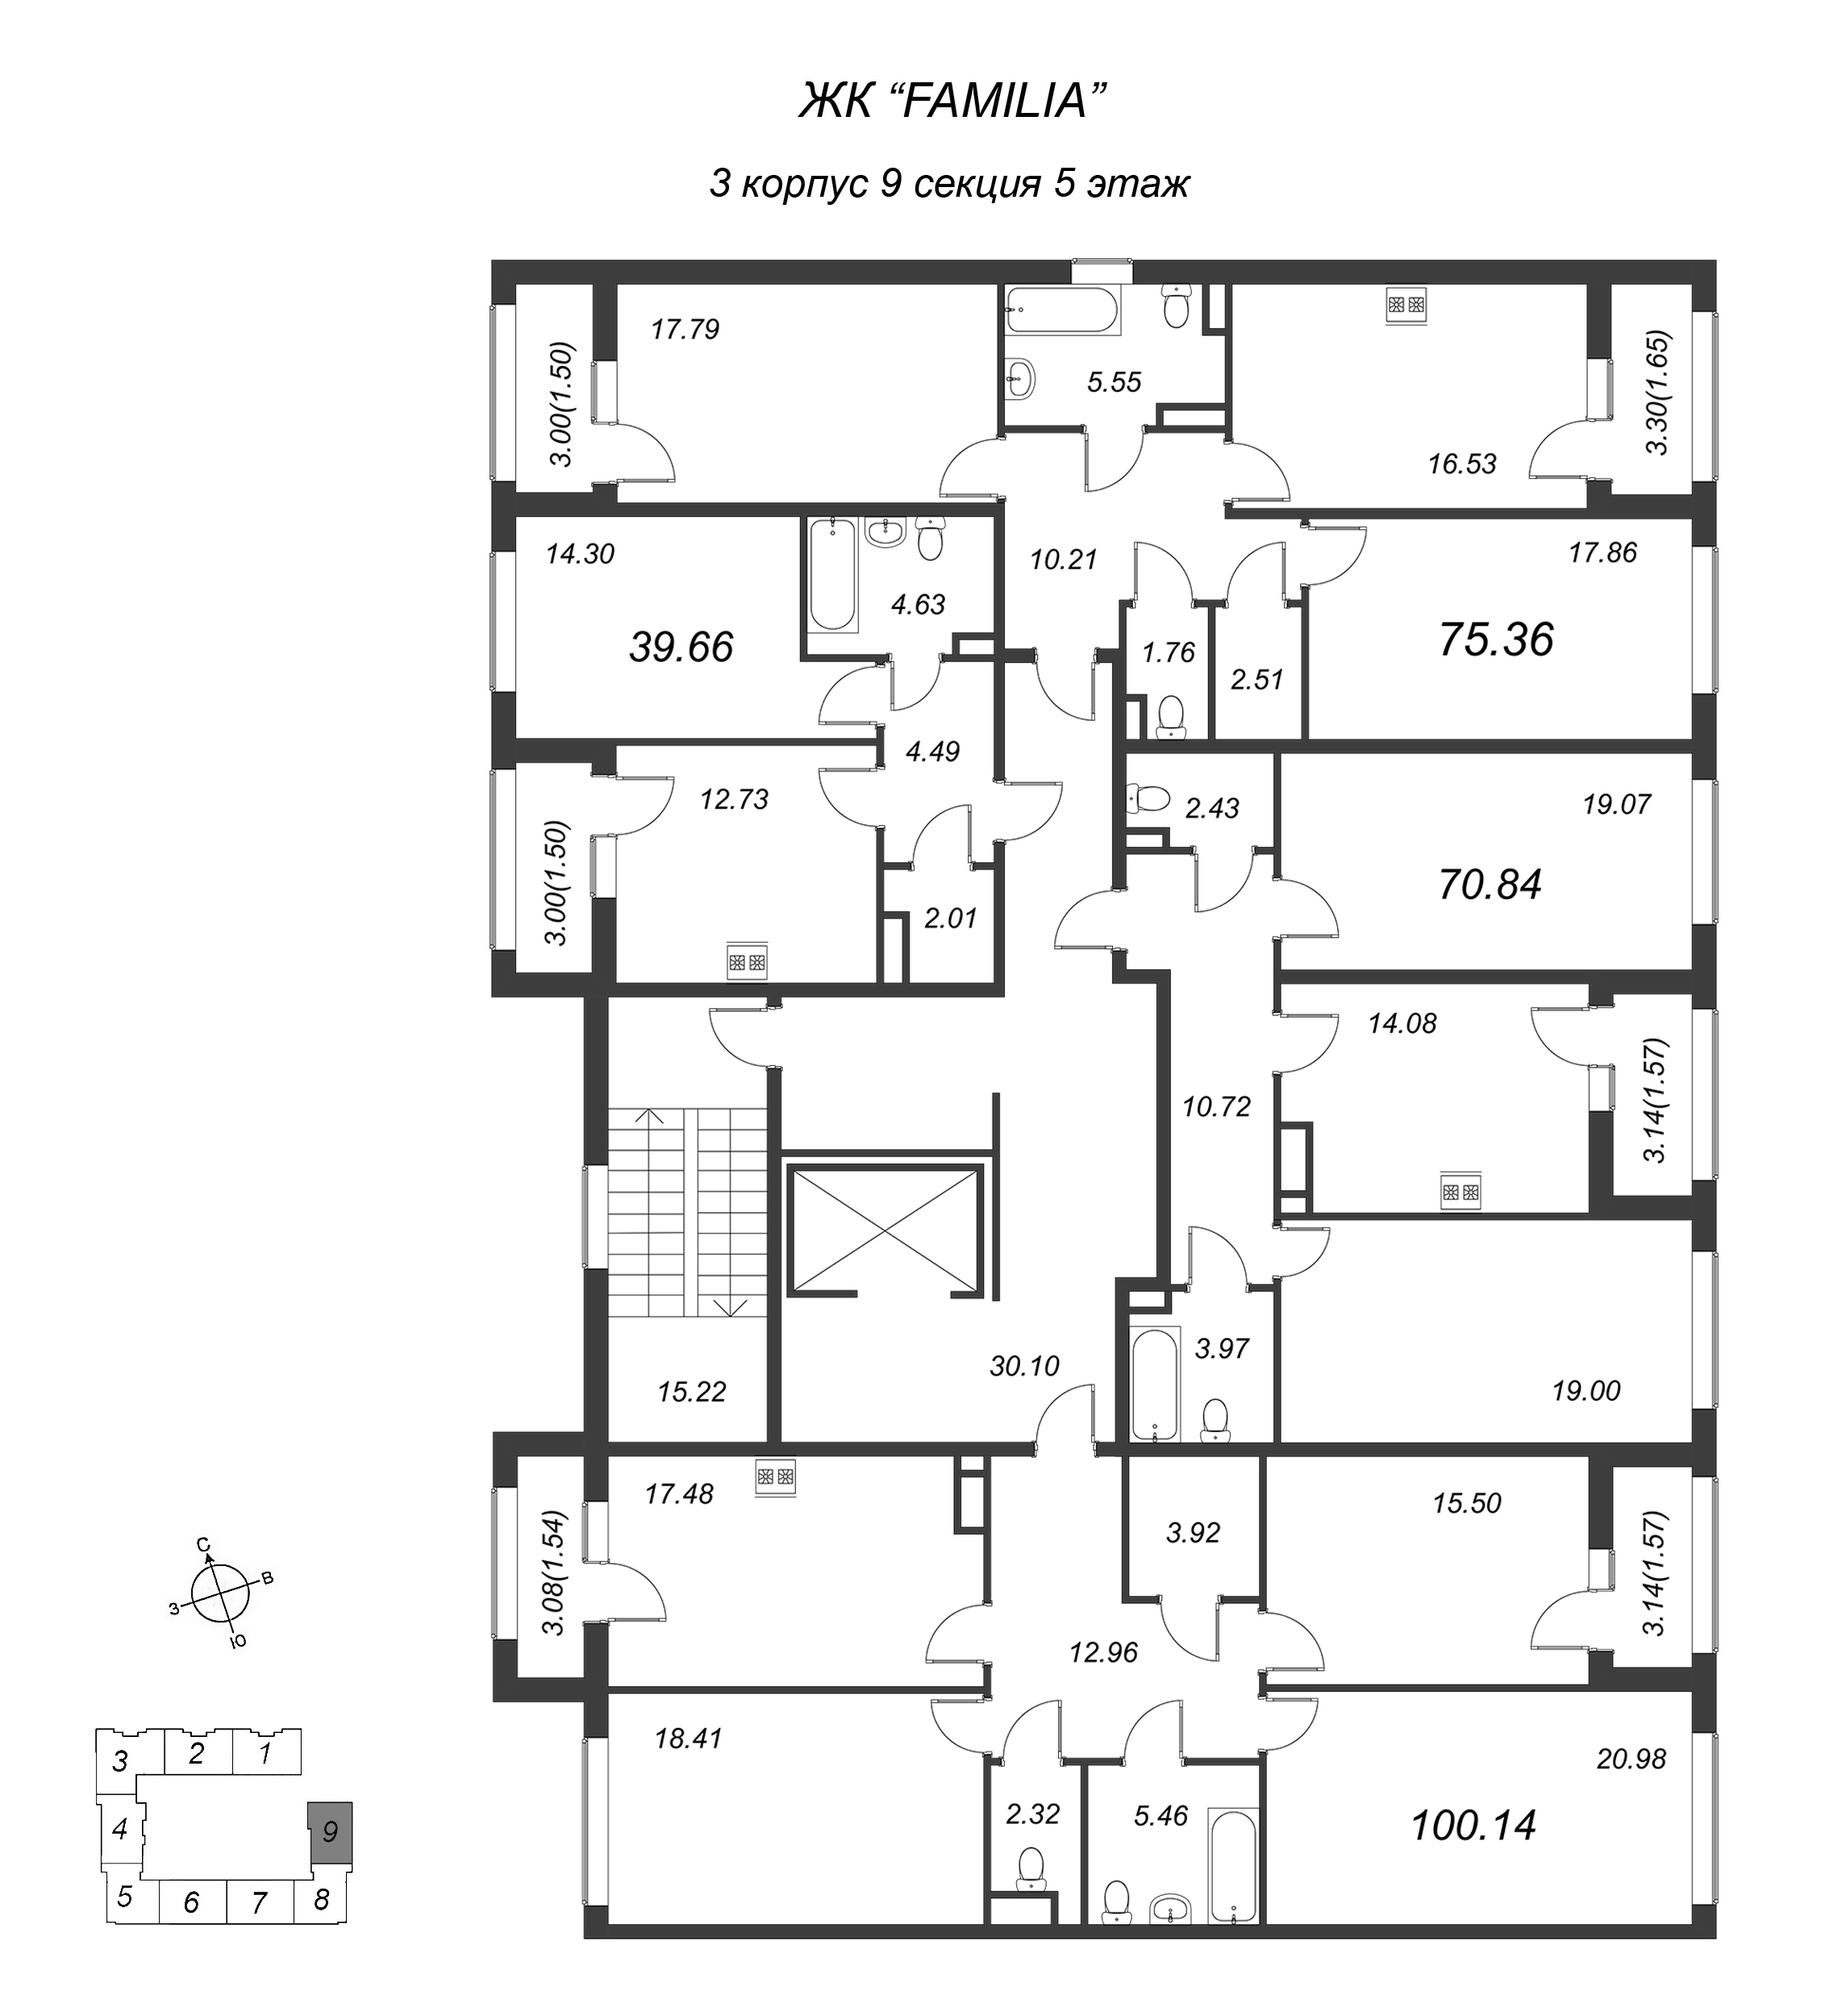 1-комнатная квартира, 39.7 м² в ЖК "FAMILIA" - планировка этажа